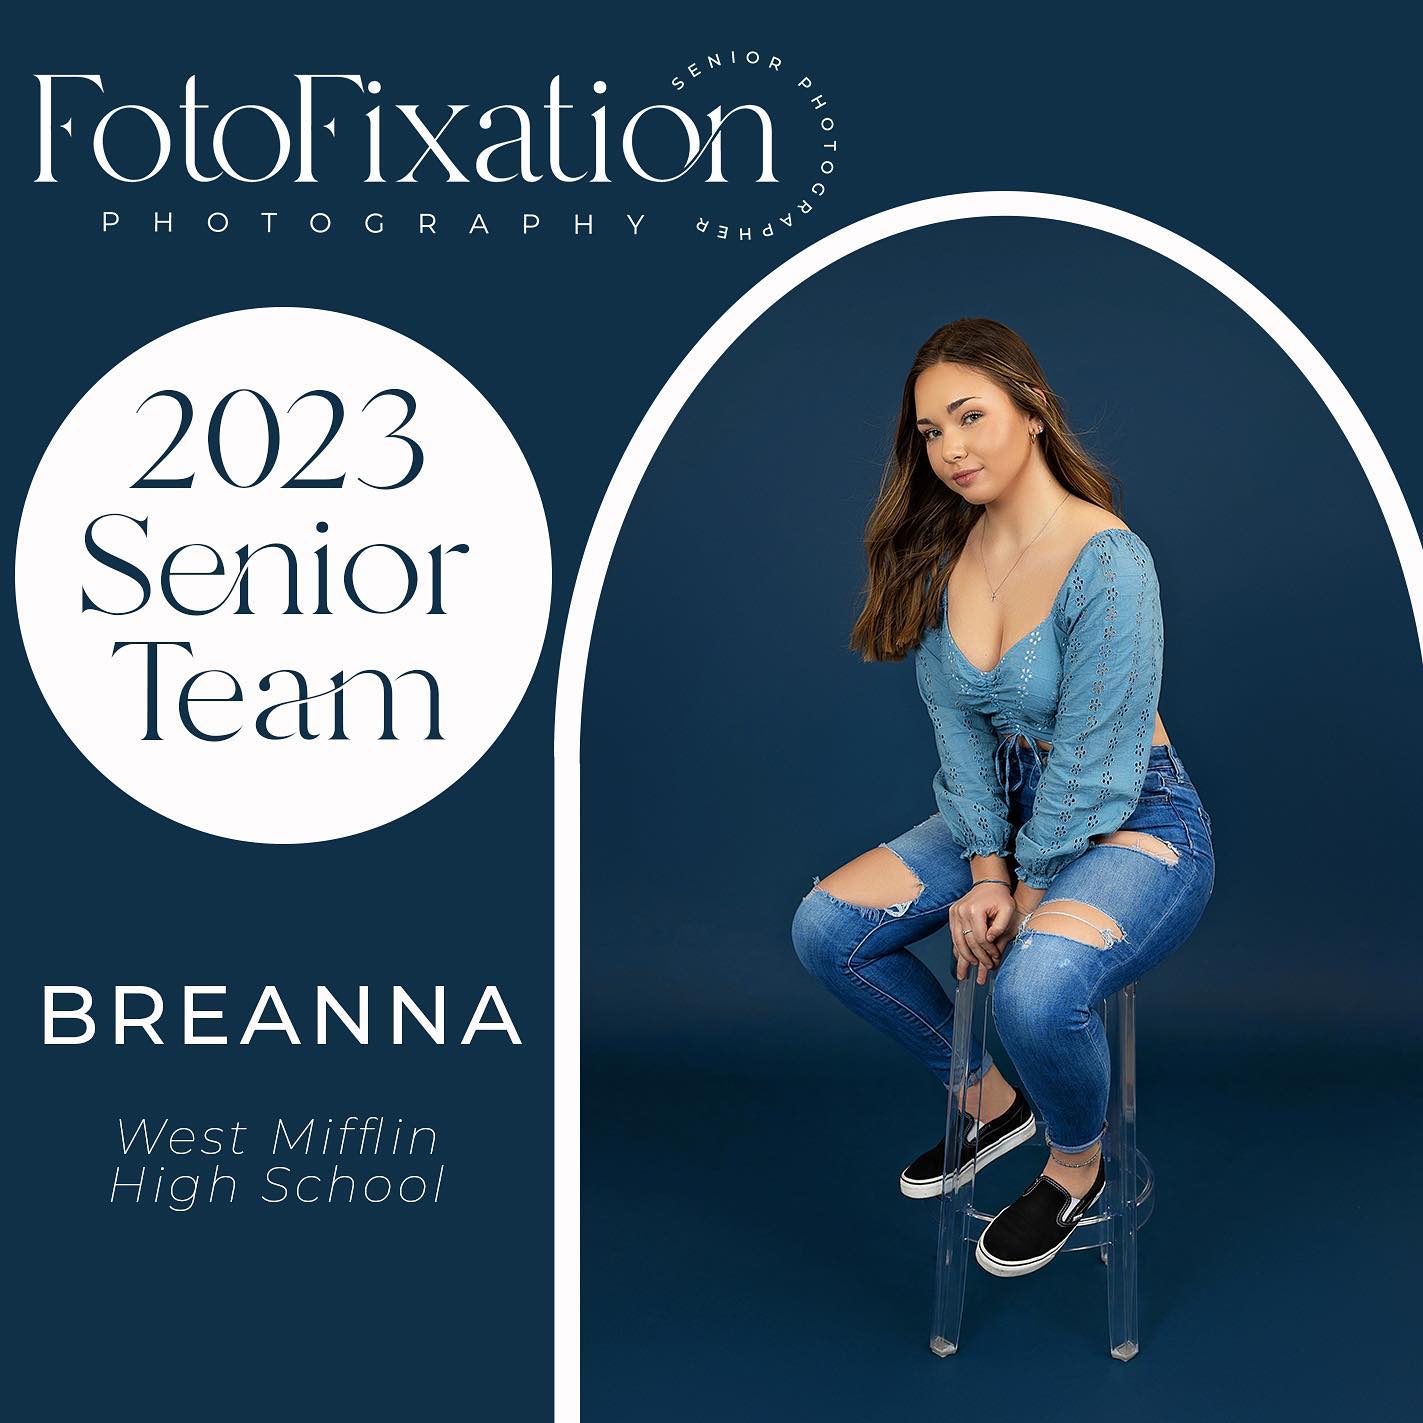 Fotofixation Photography - 2023 Senior Team - Breanna - West Mifflin High School-1